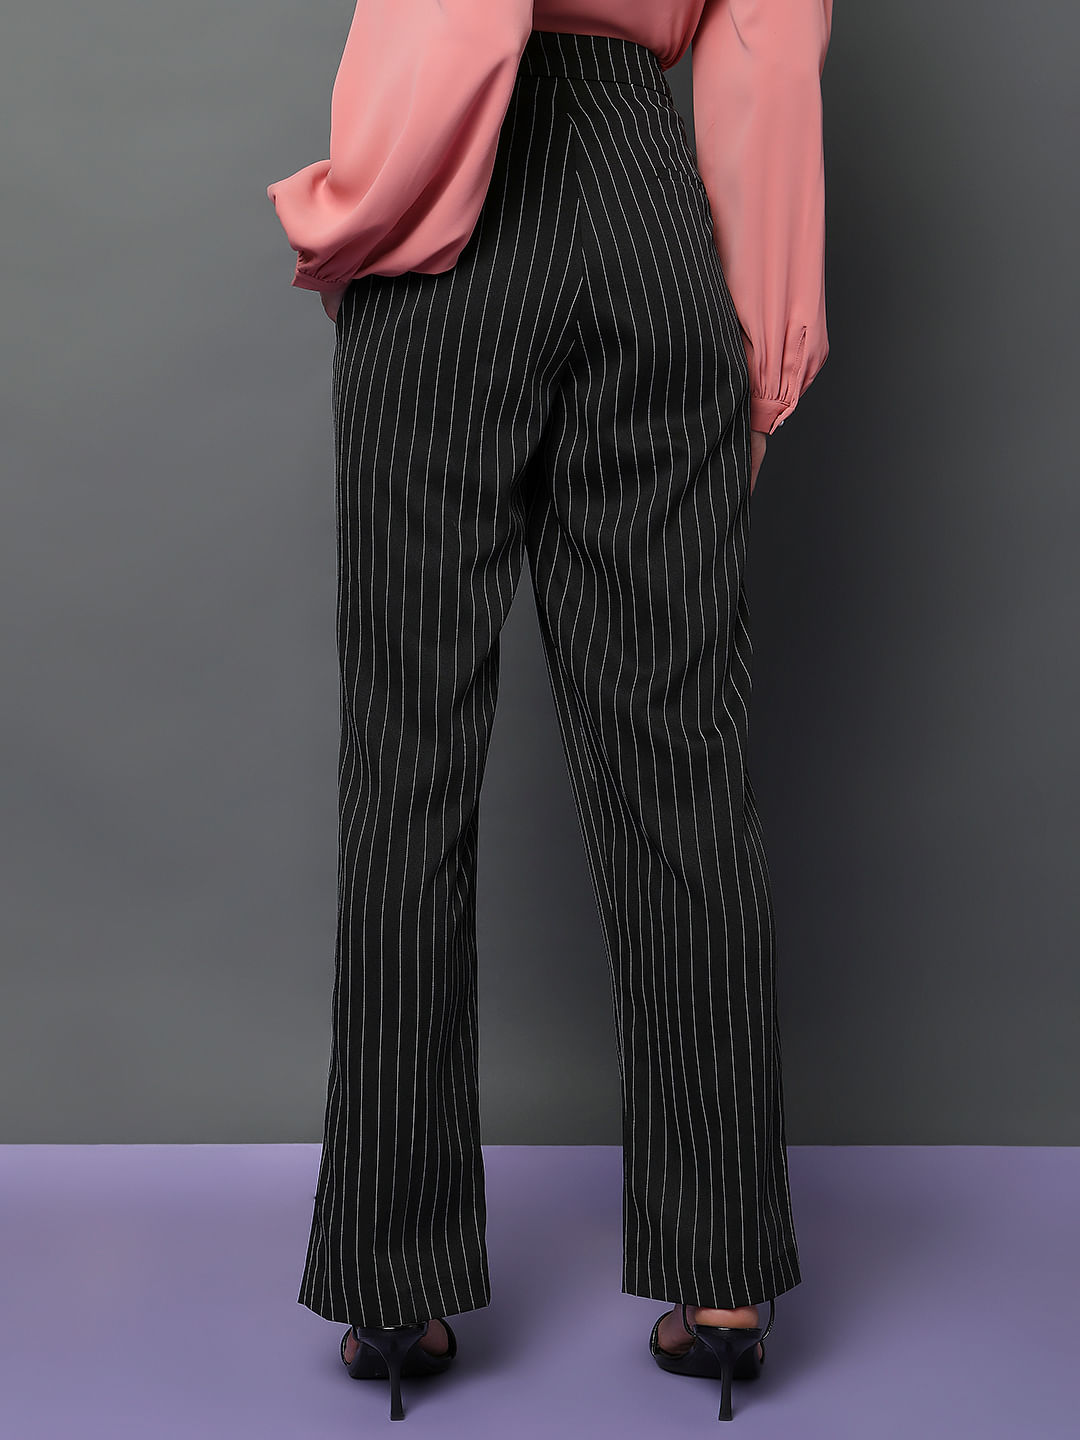 PullBear high waist pinstripe pants in black  part of a set  ASOS